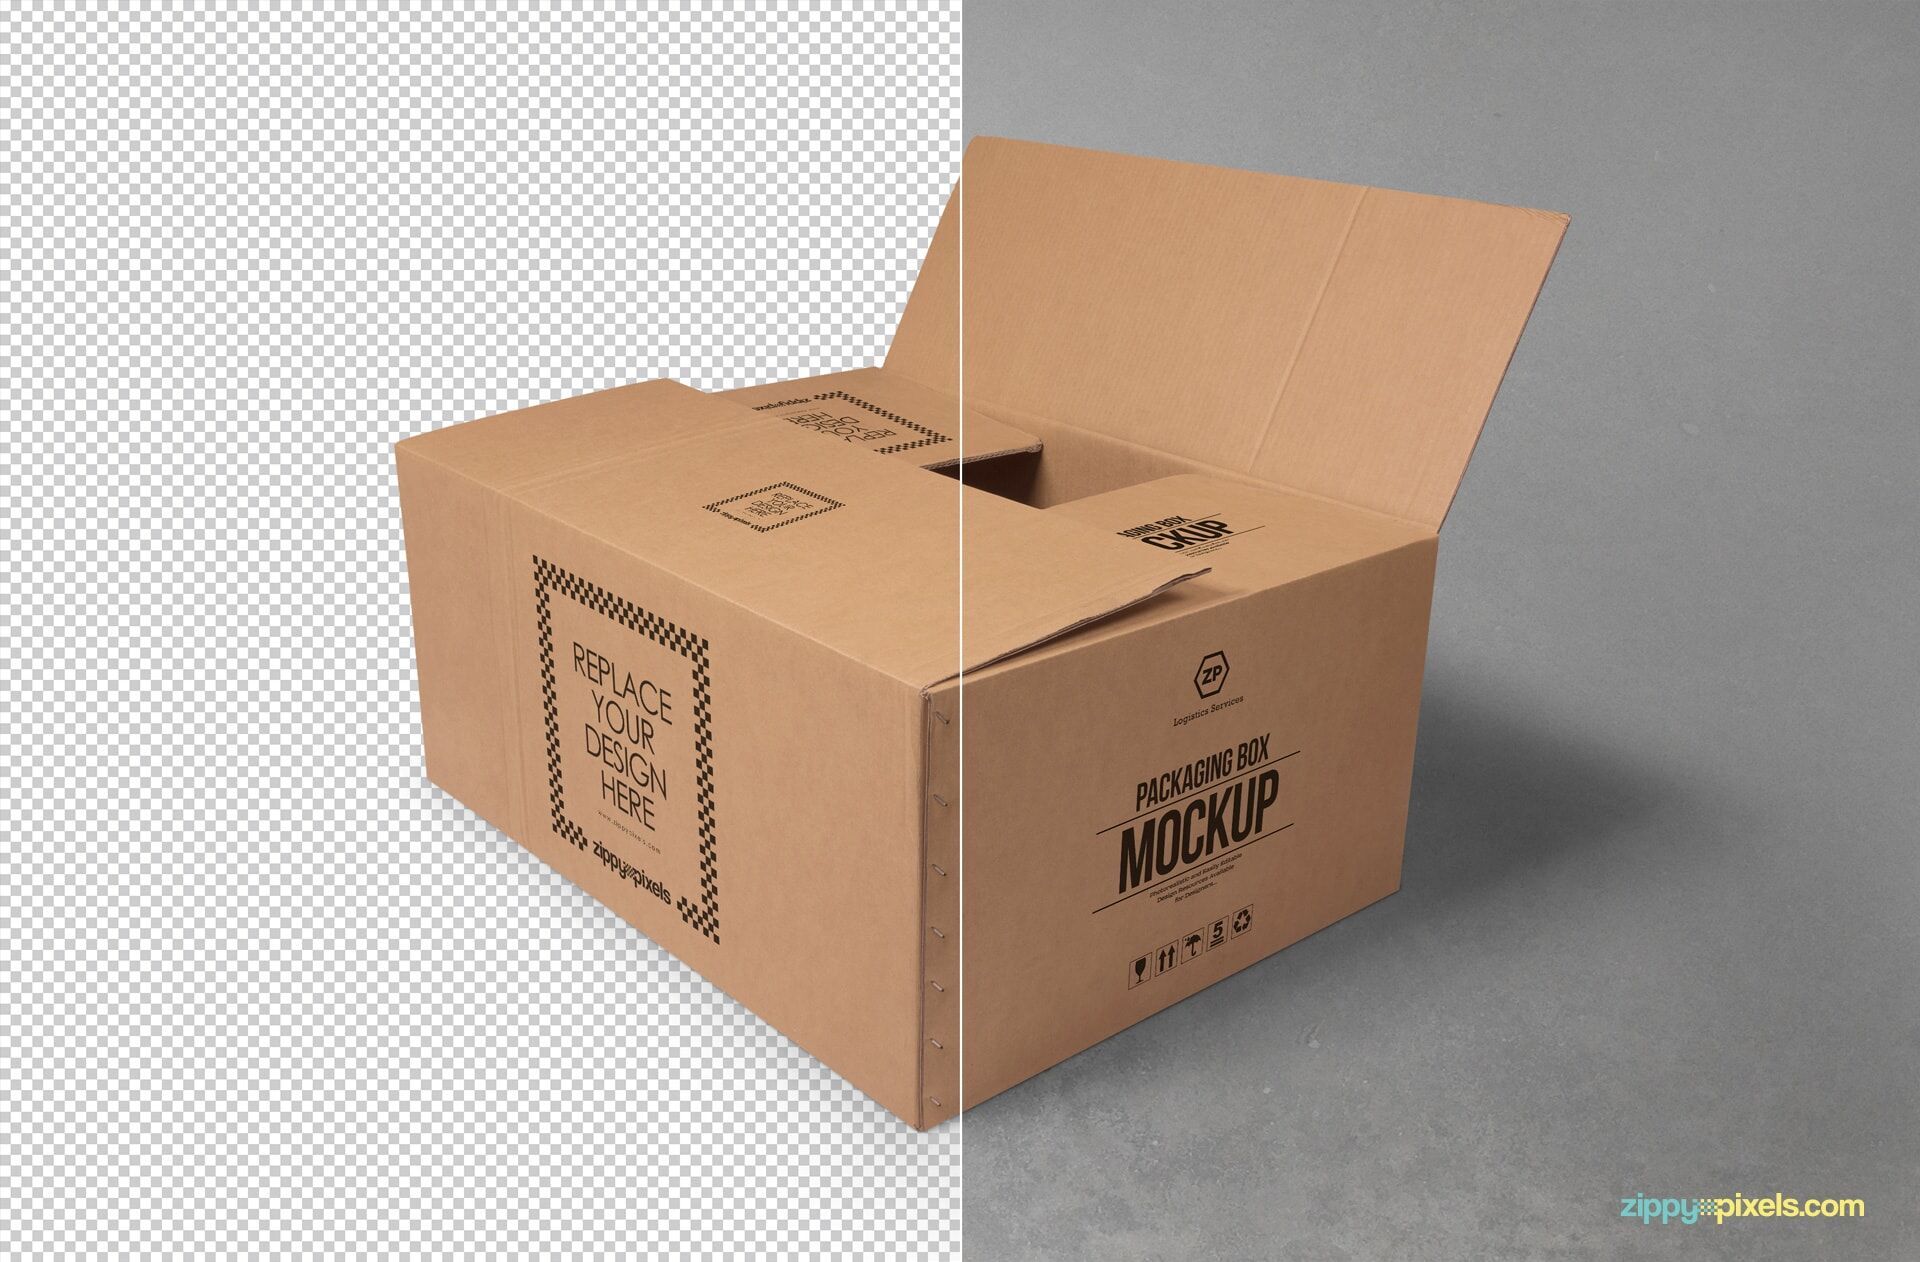 Cardboard Box Mockup For Packaging FREE PSD